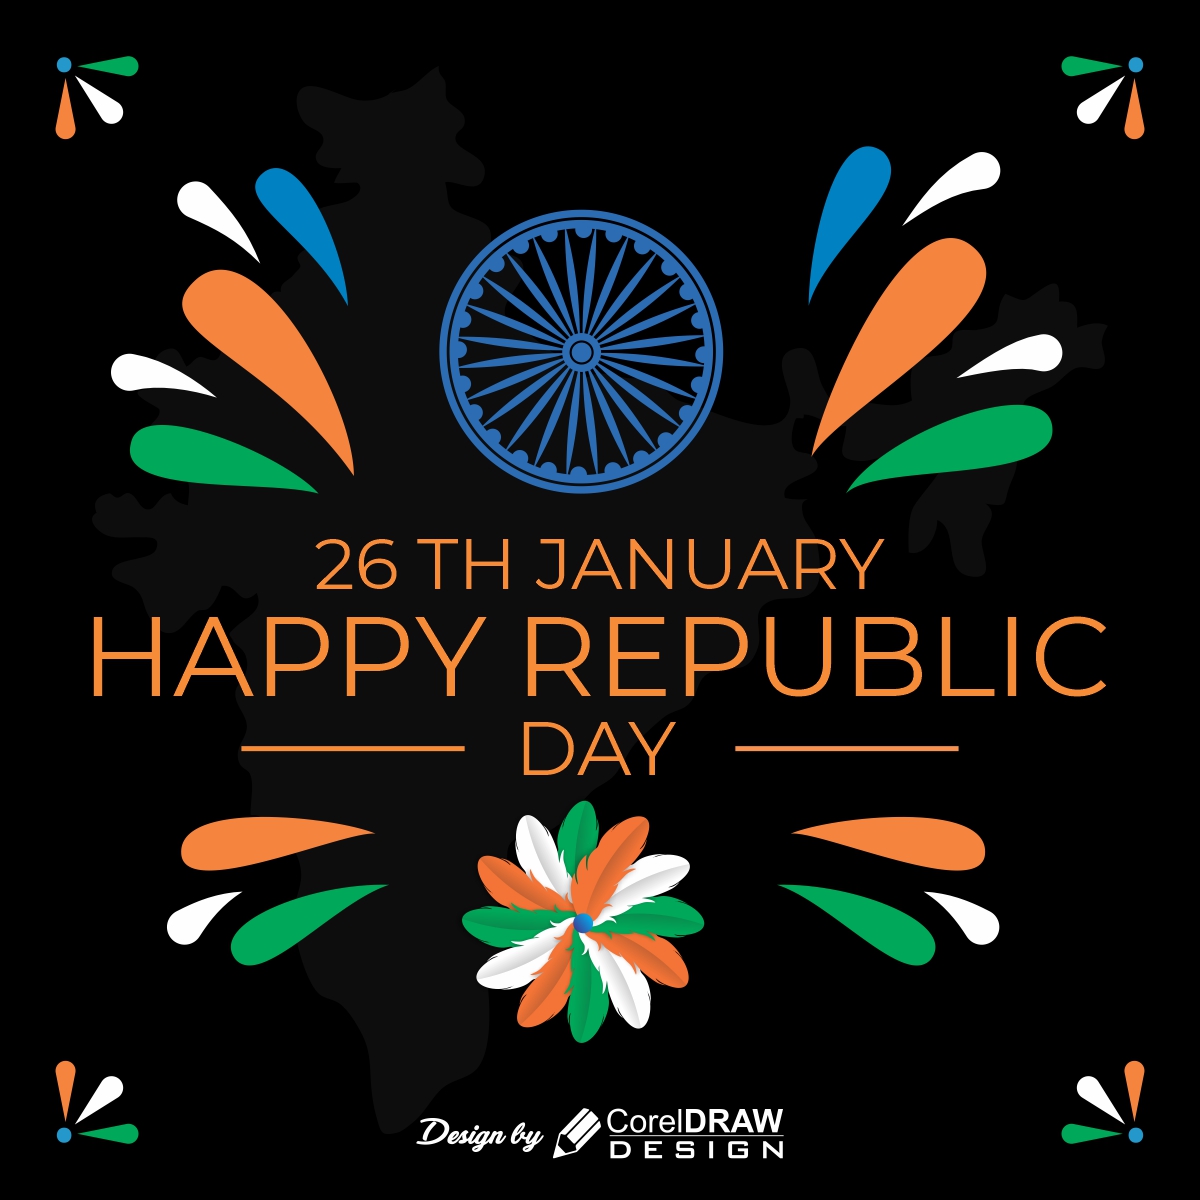 Republic Day, 2017 by Sunil Kumar Yadav on Dribbble